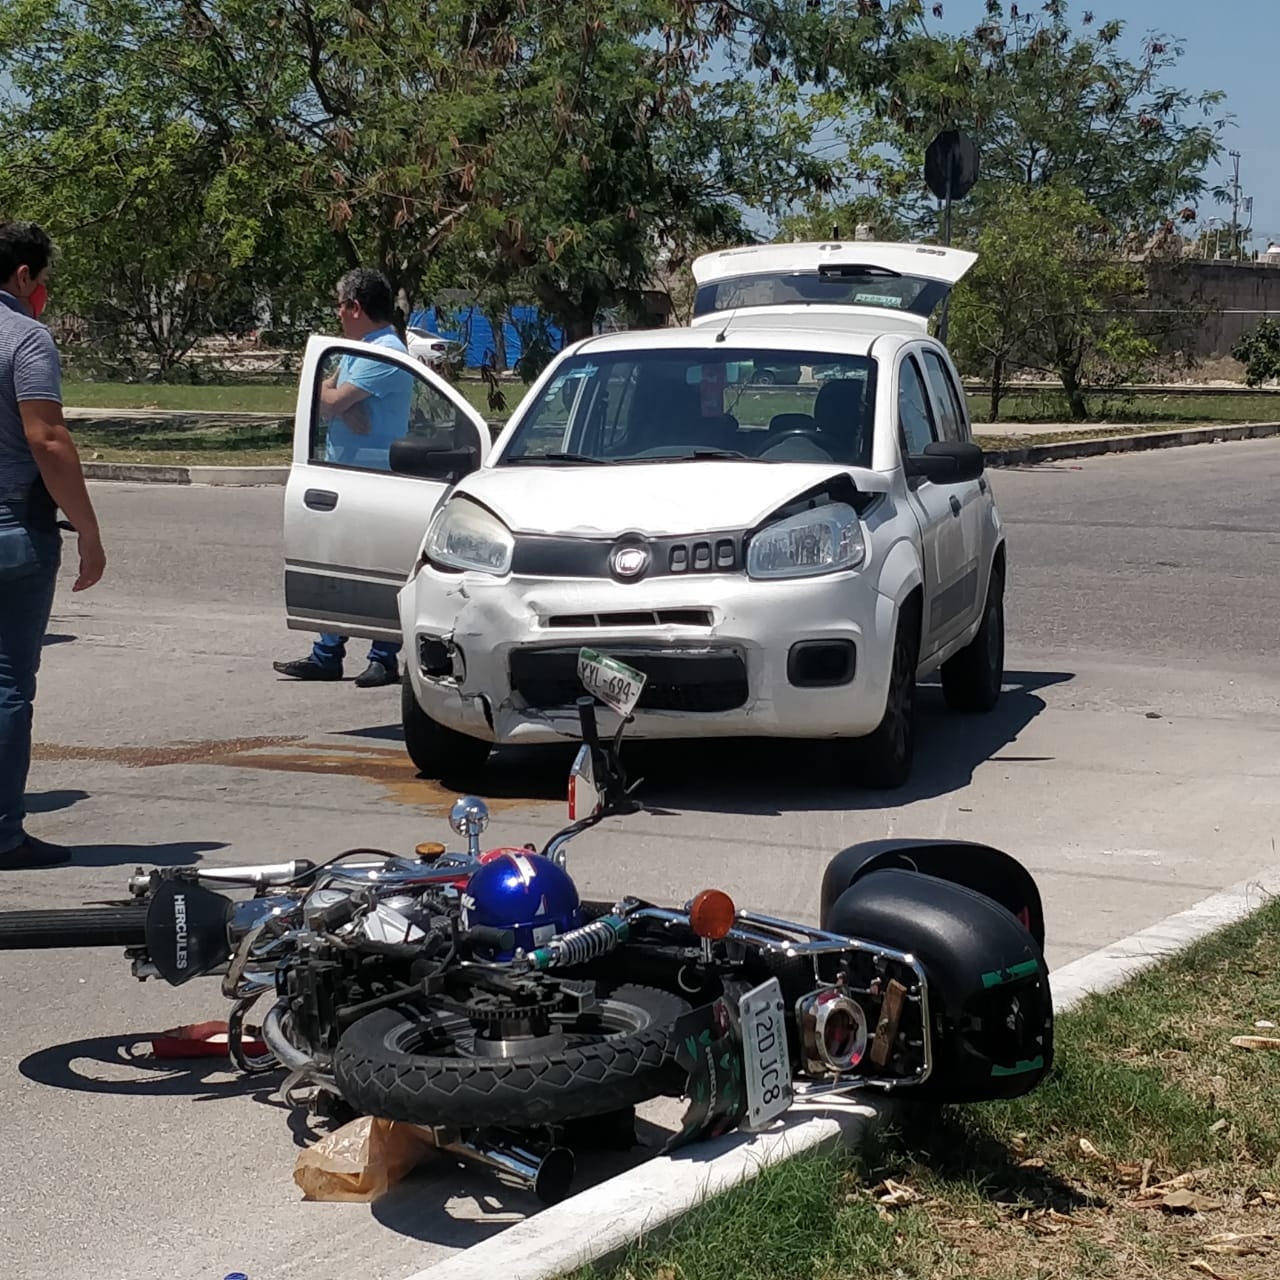 Por no respetar cruzamiento, motociclista termina en hospital en Mérida